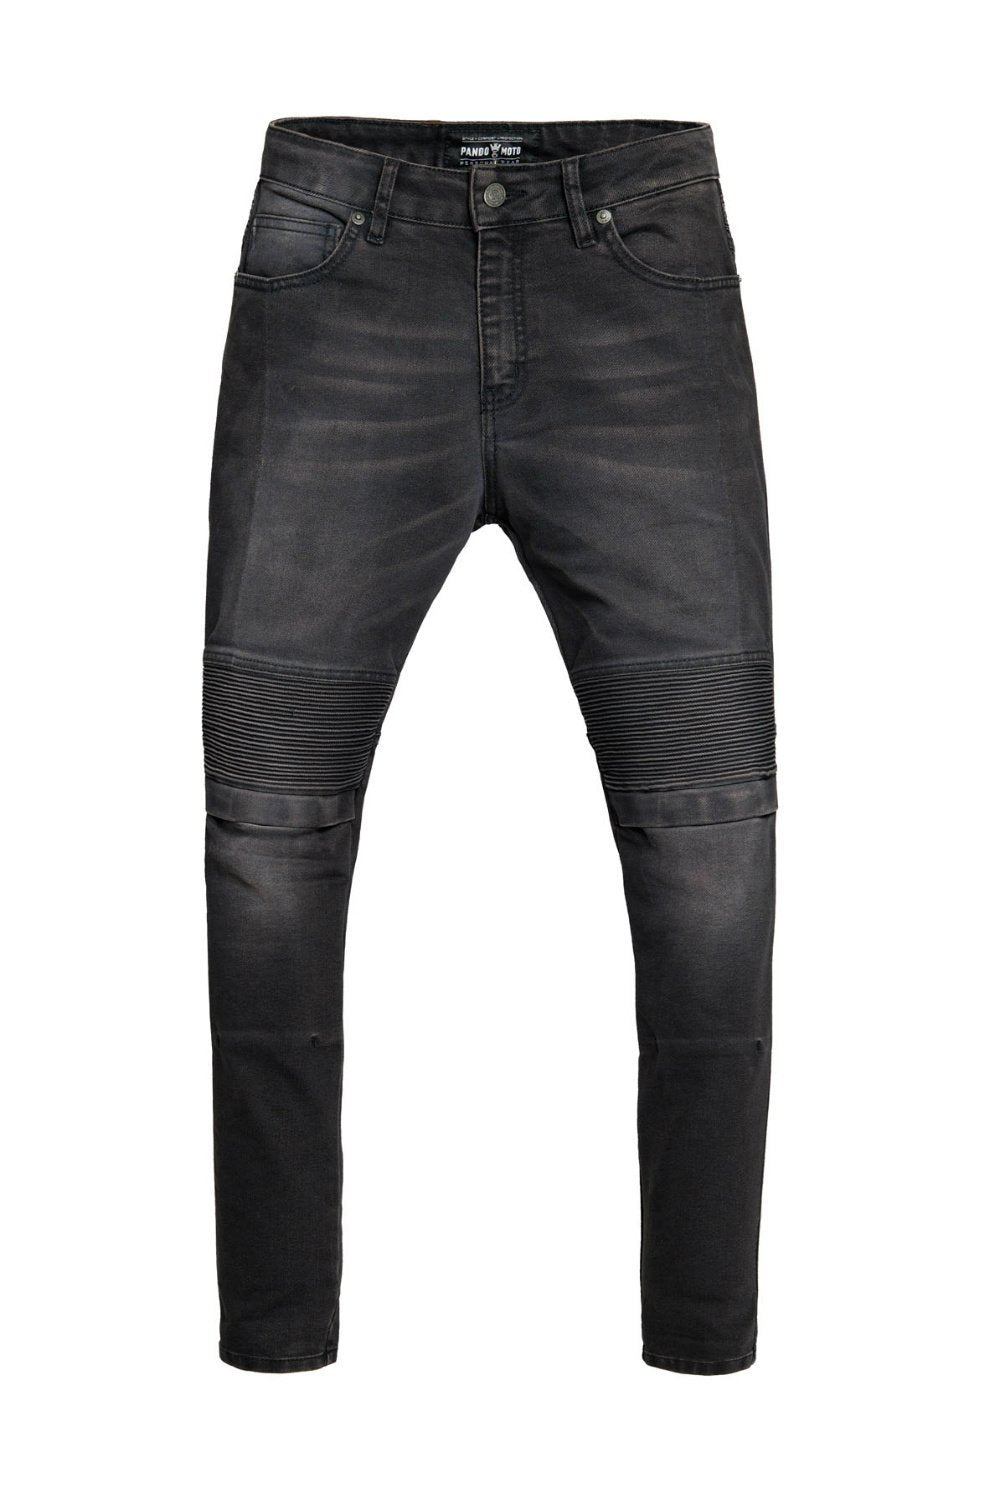 Buy Black Jeans for Men by TRIGGER Online | Ajio.com